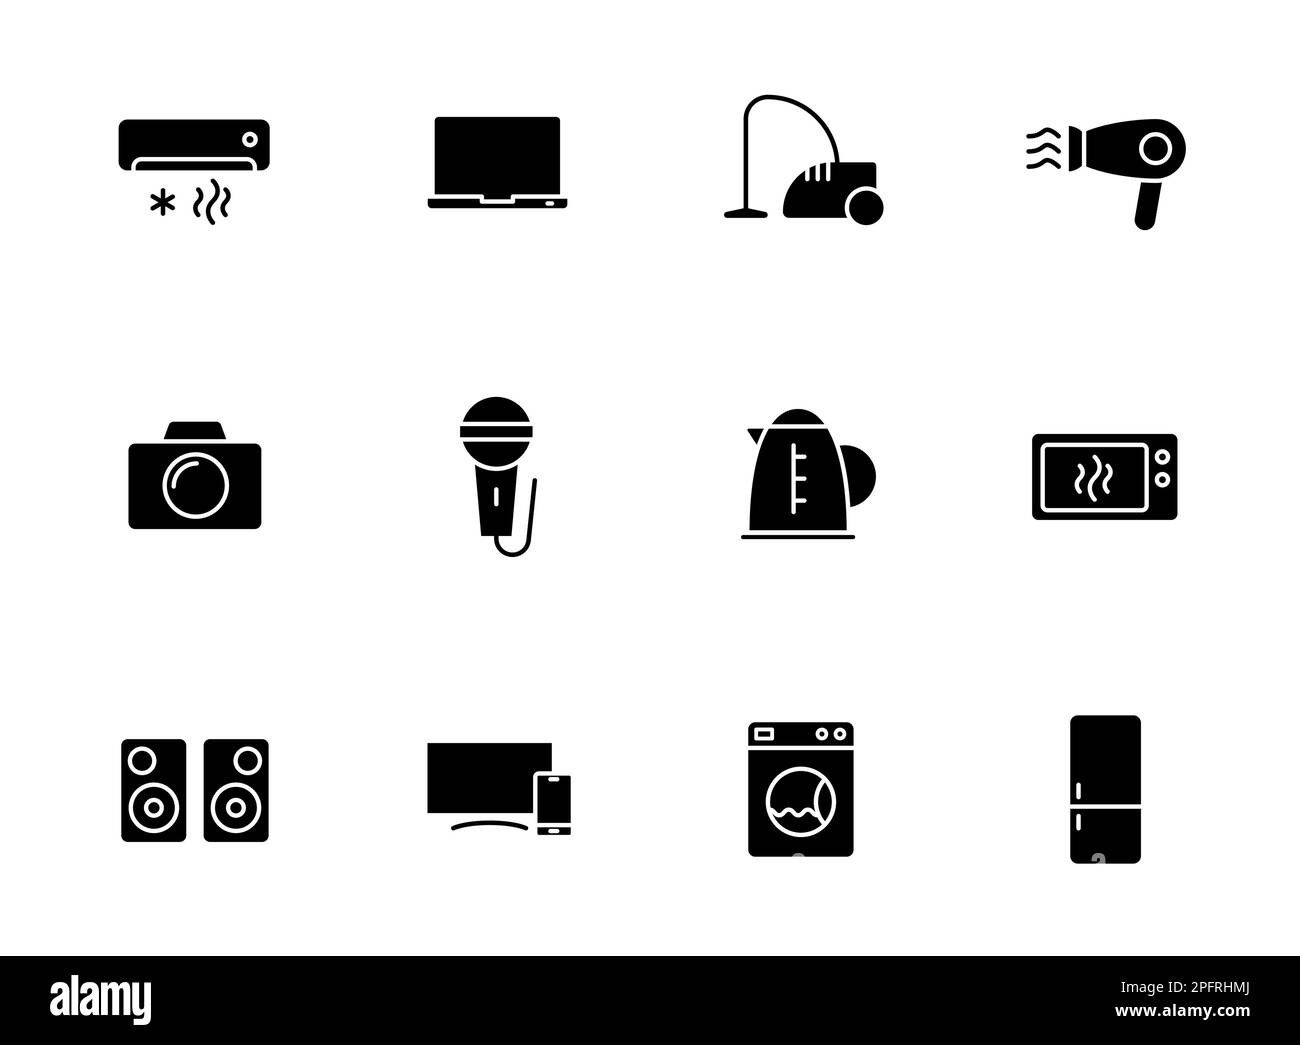 home appliances silhouette vector icons Stock Vector